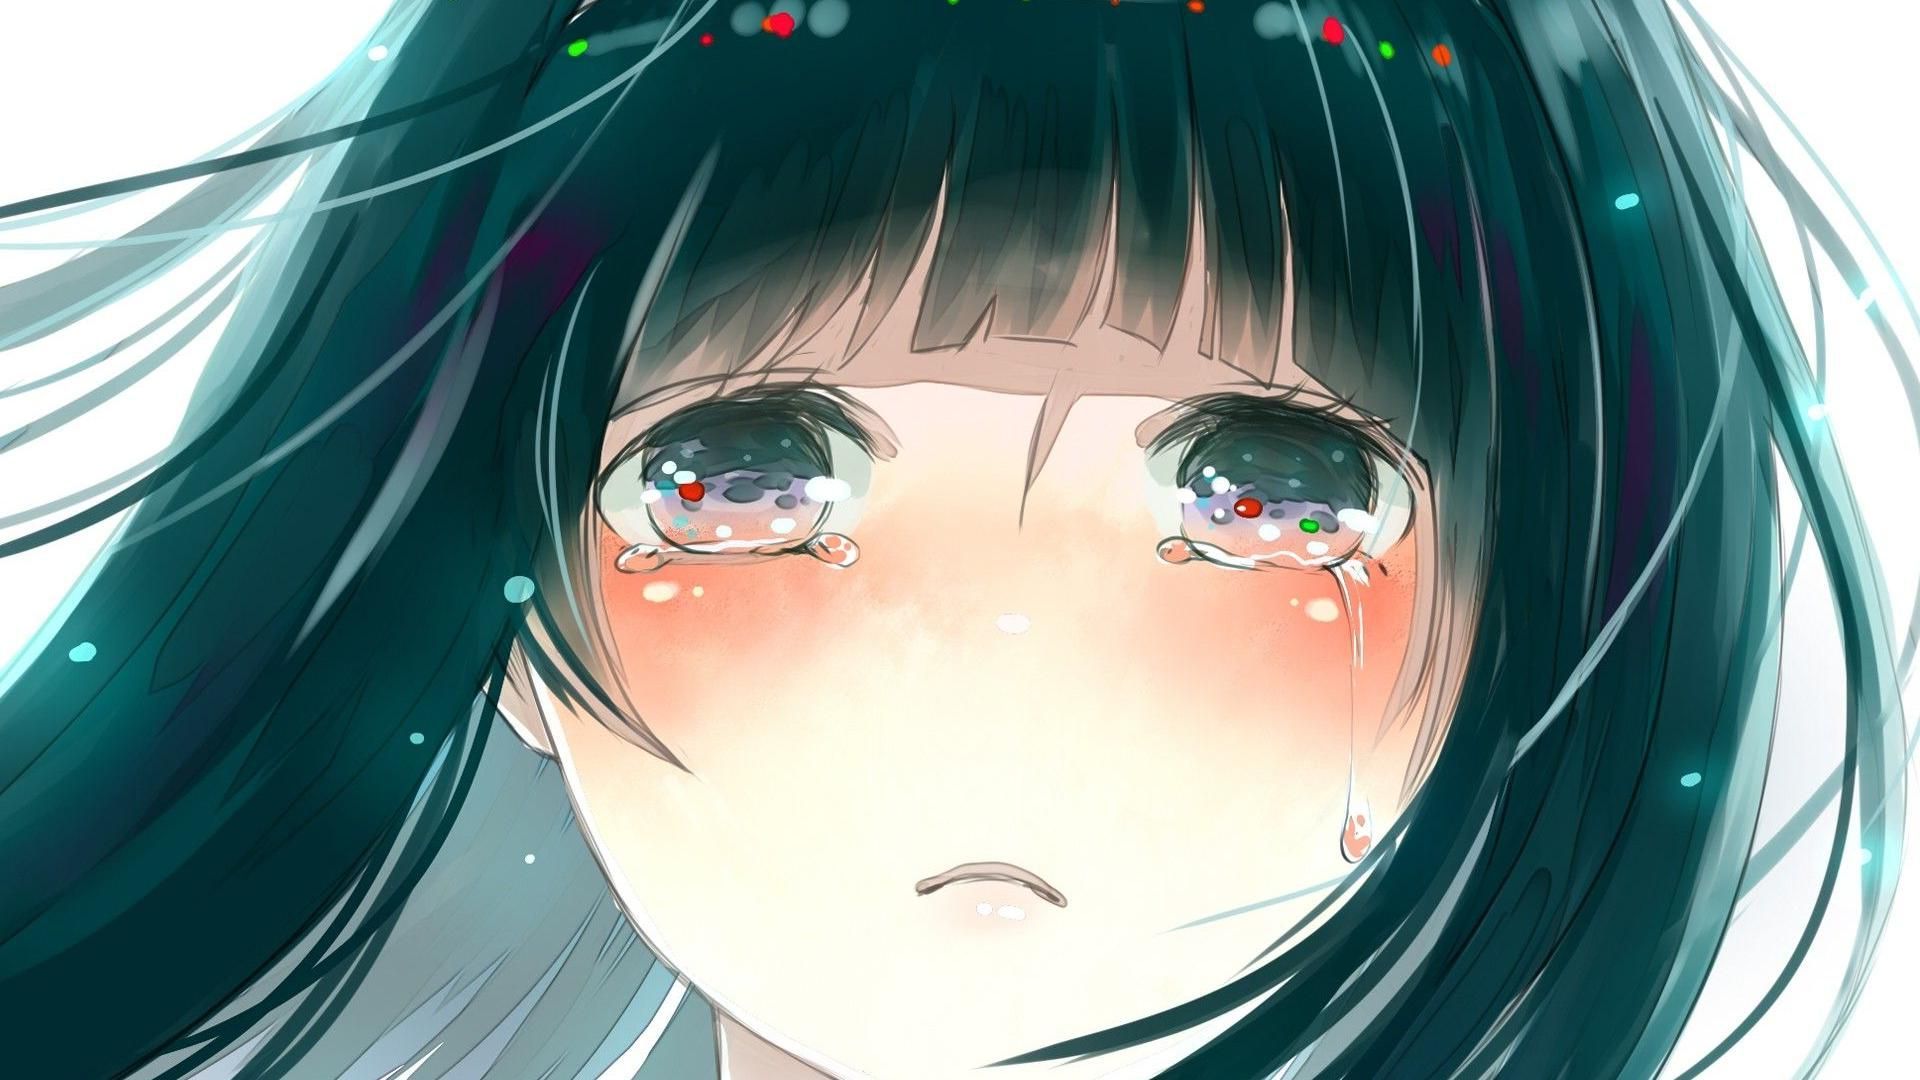 Kumpulan Wallpaper Anime Girl Cry | Download Kumpulan Wallpaper Hitam Polos